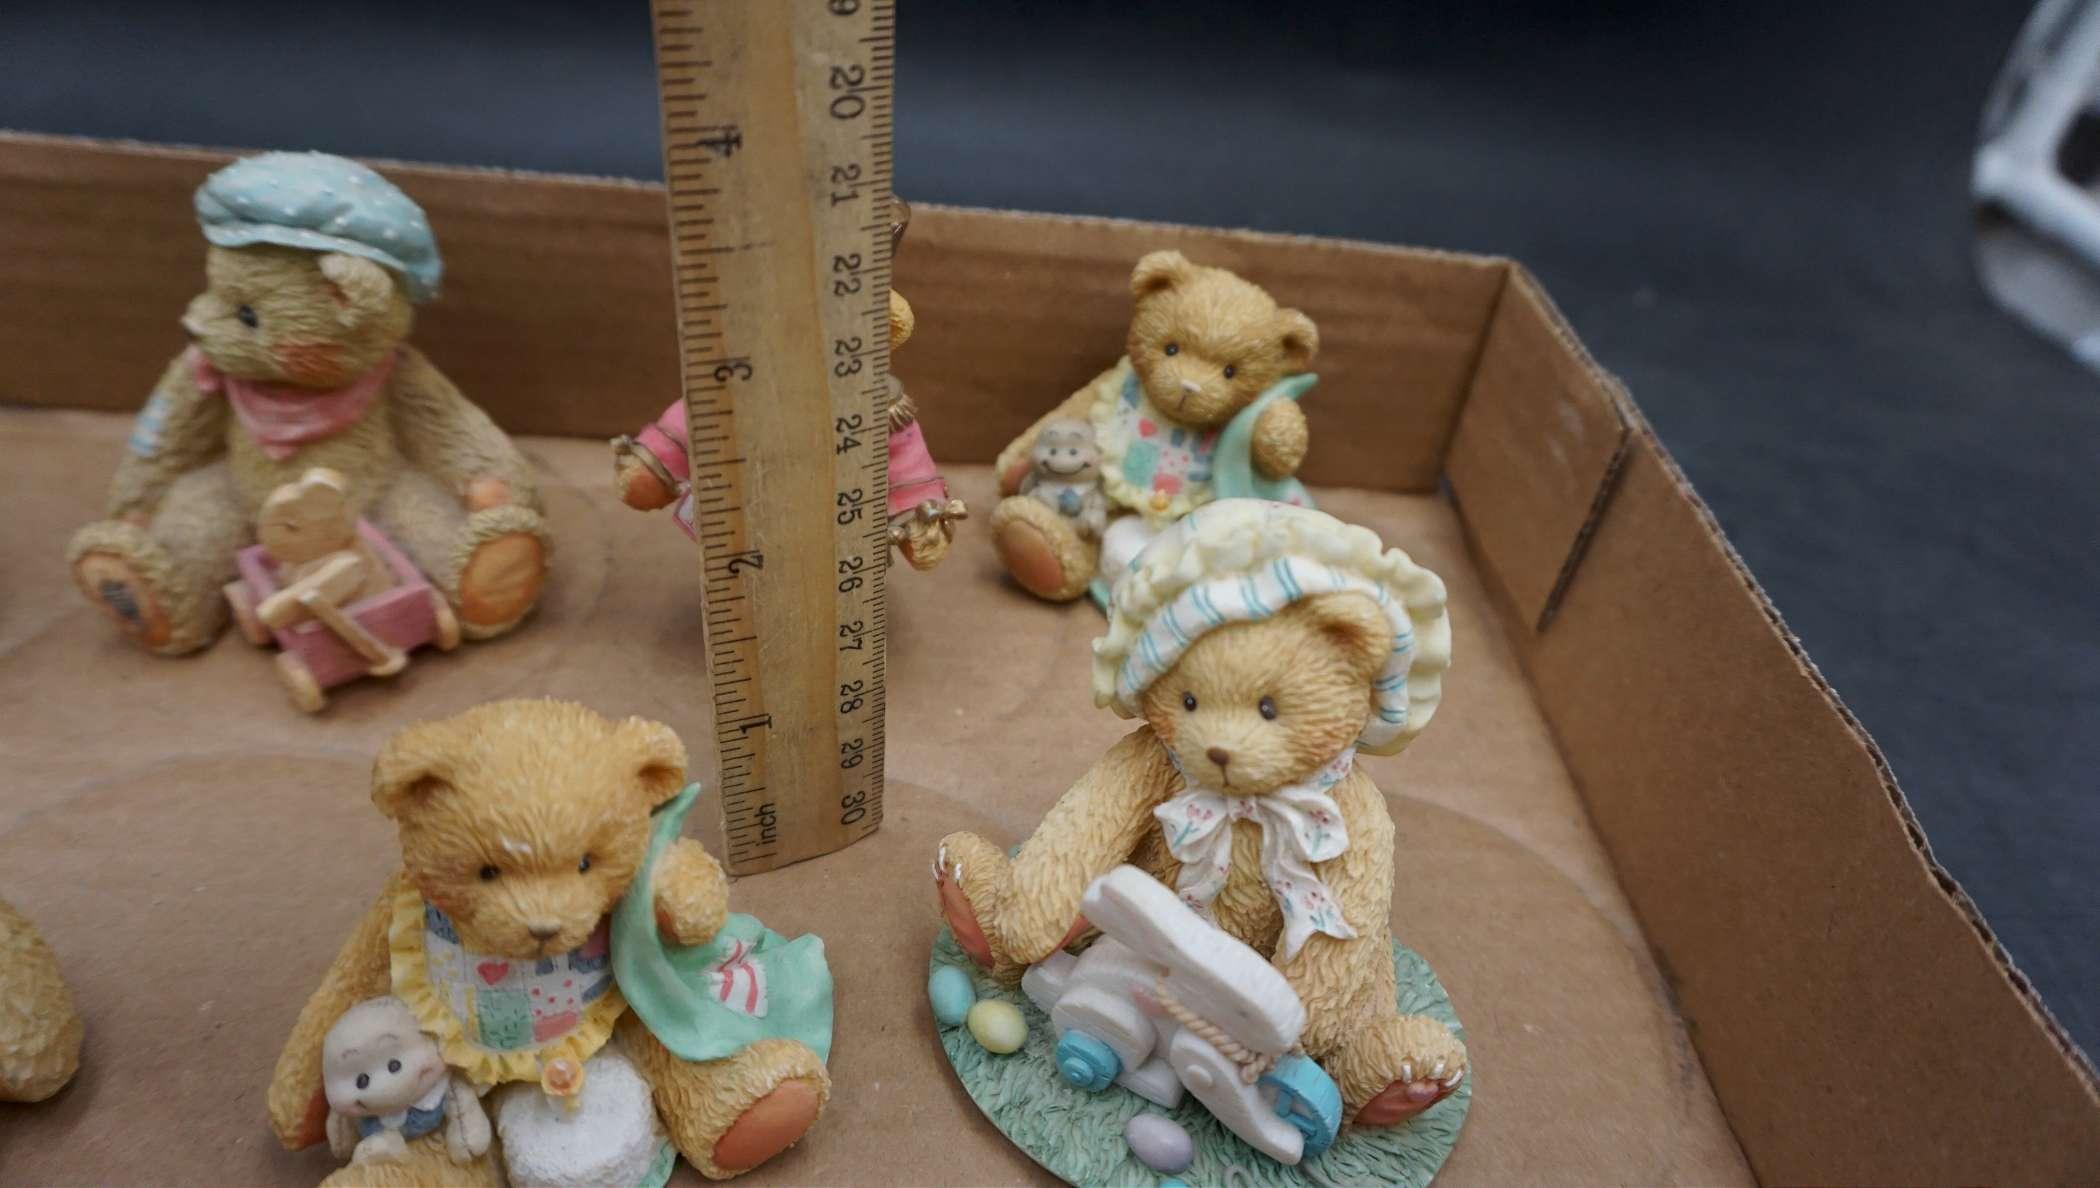 6 - Bear Figurines & 1 Bear Ornament